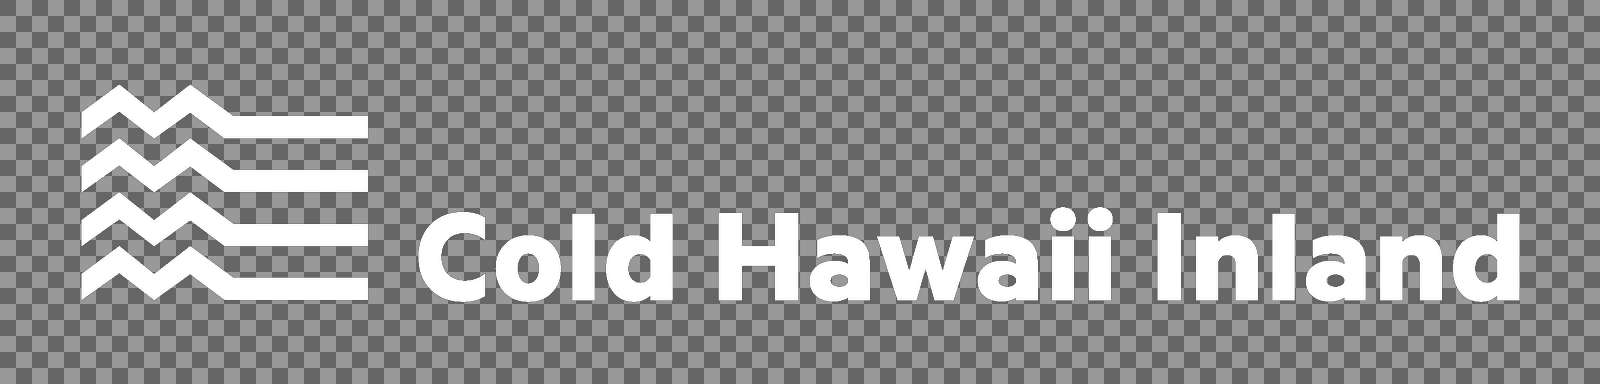 COLDHAWAii inland version1 logo